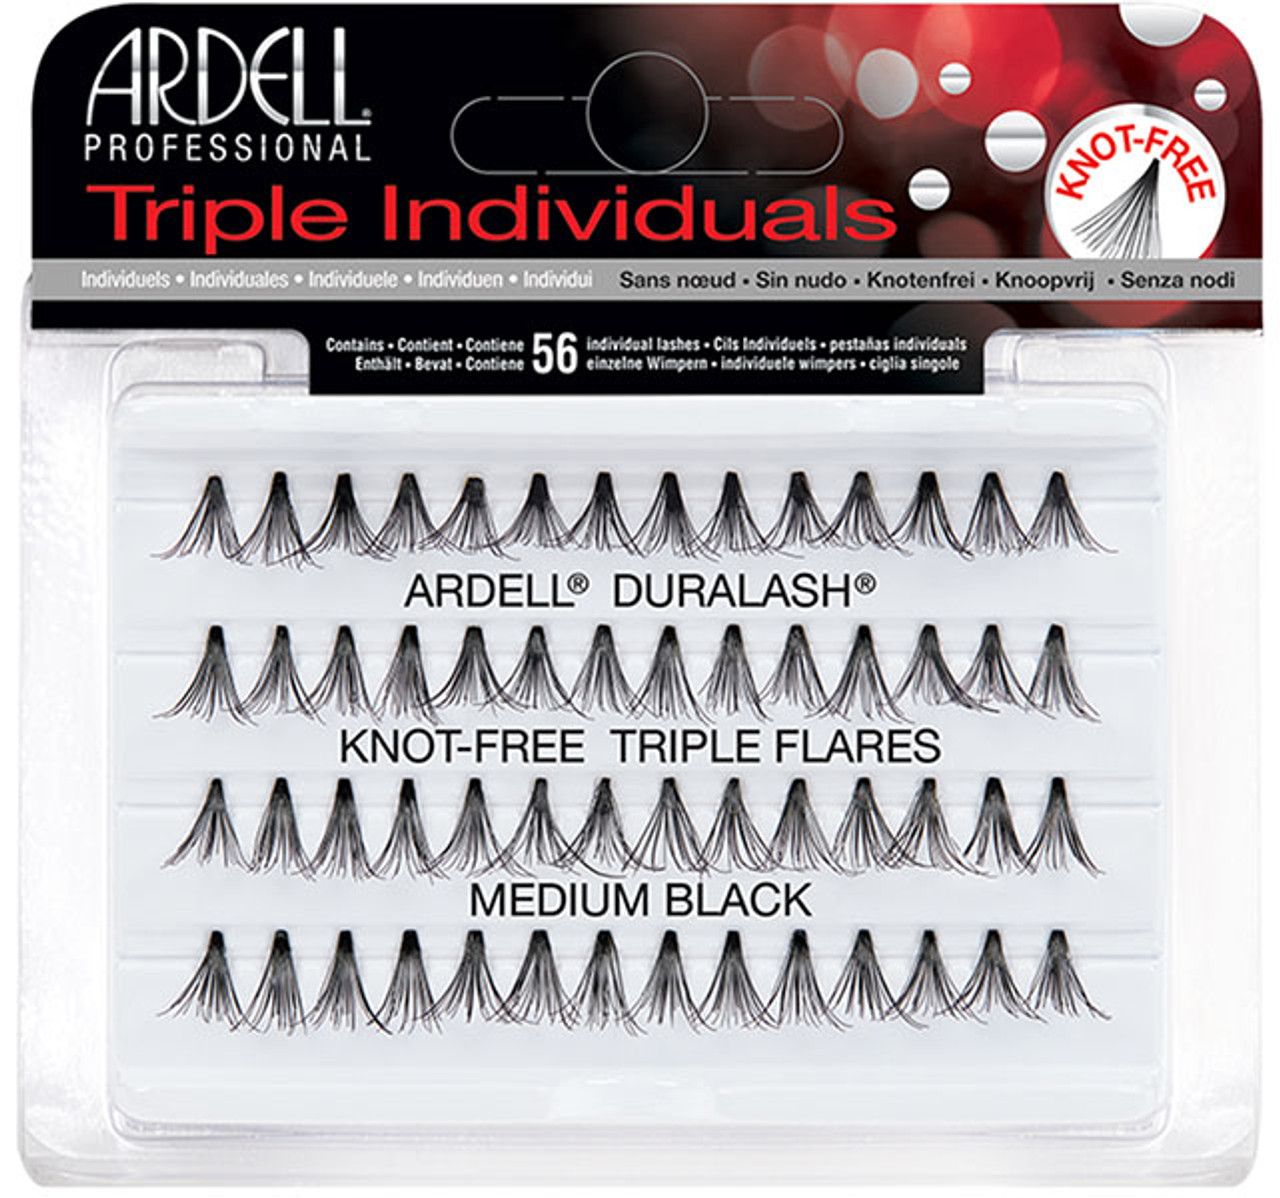 Ardell Duralash Triple Individuals - Knot-Free Triple Flares Medium Black